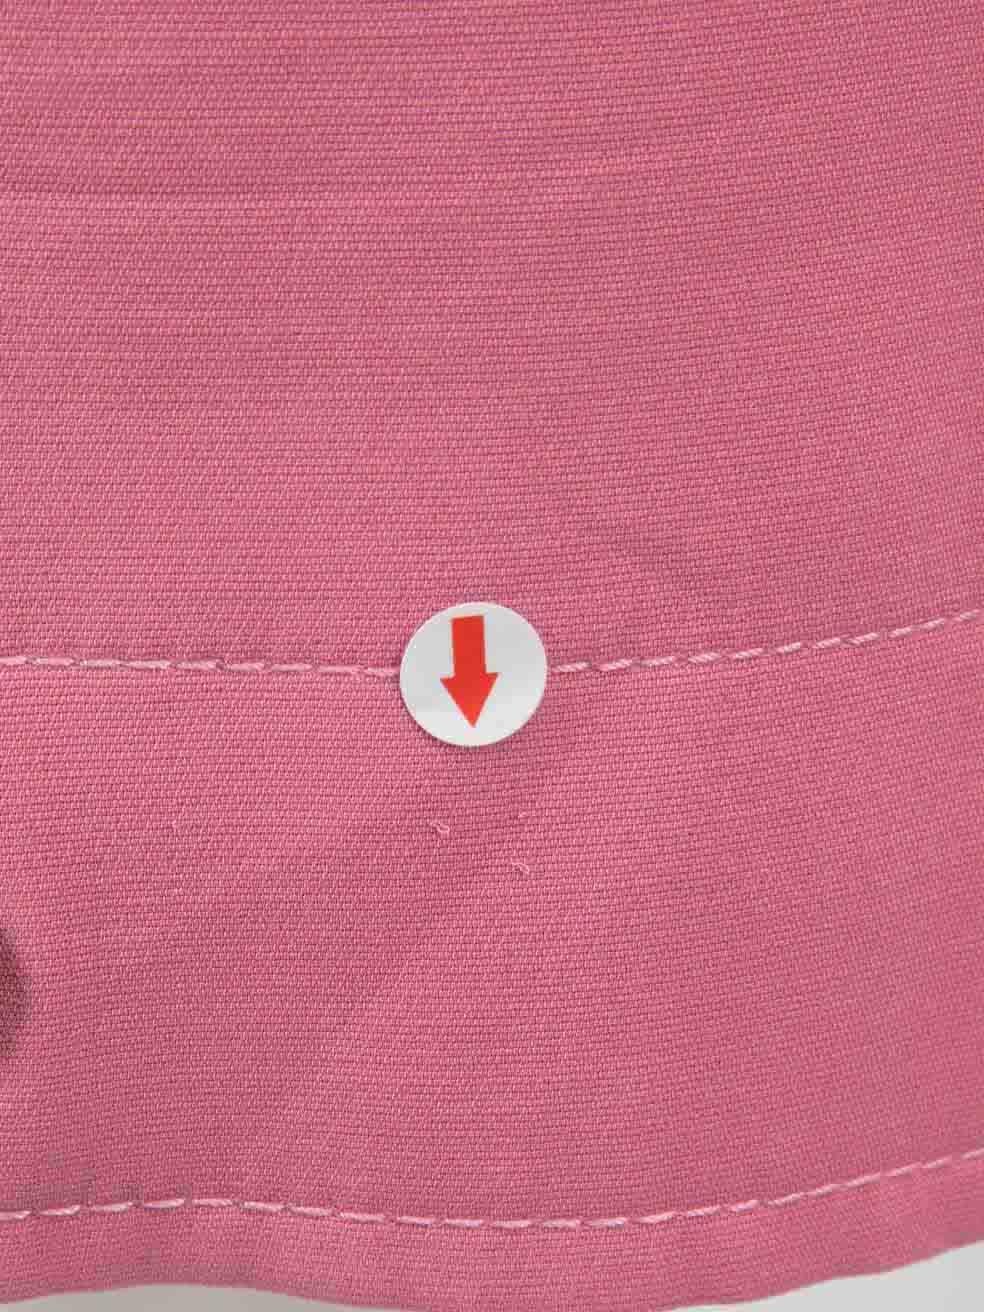 Women's Gucci Pink Silk Button Detail Mini Dress Size XXL For Sale